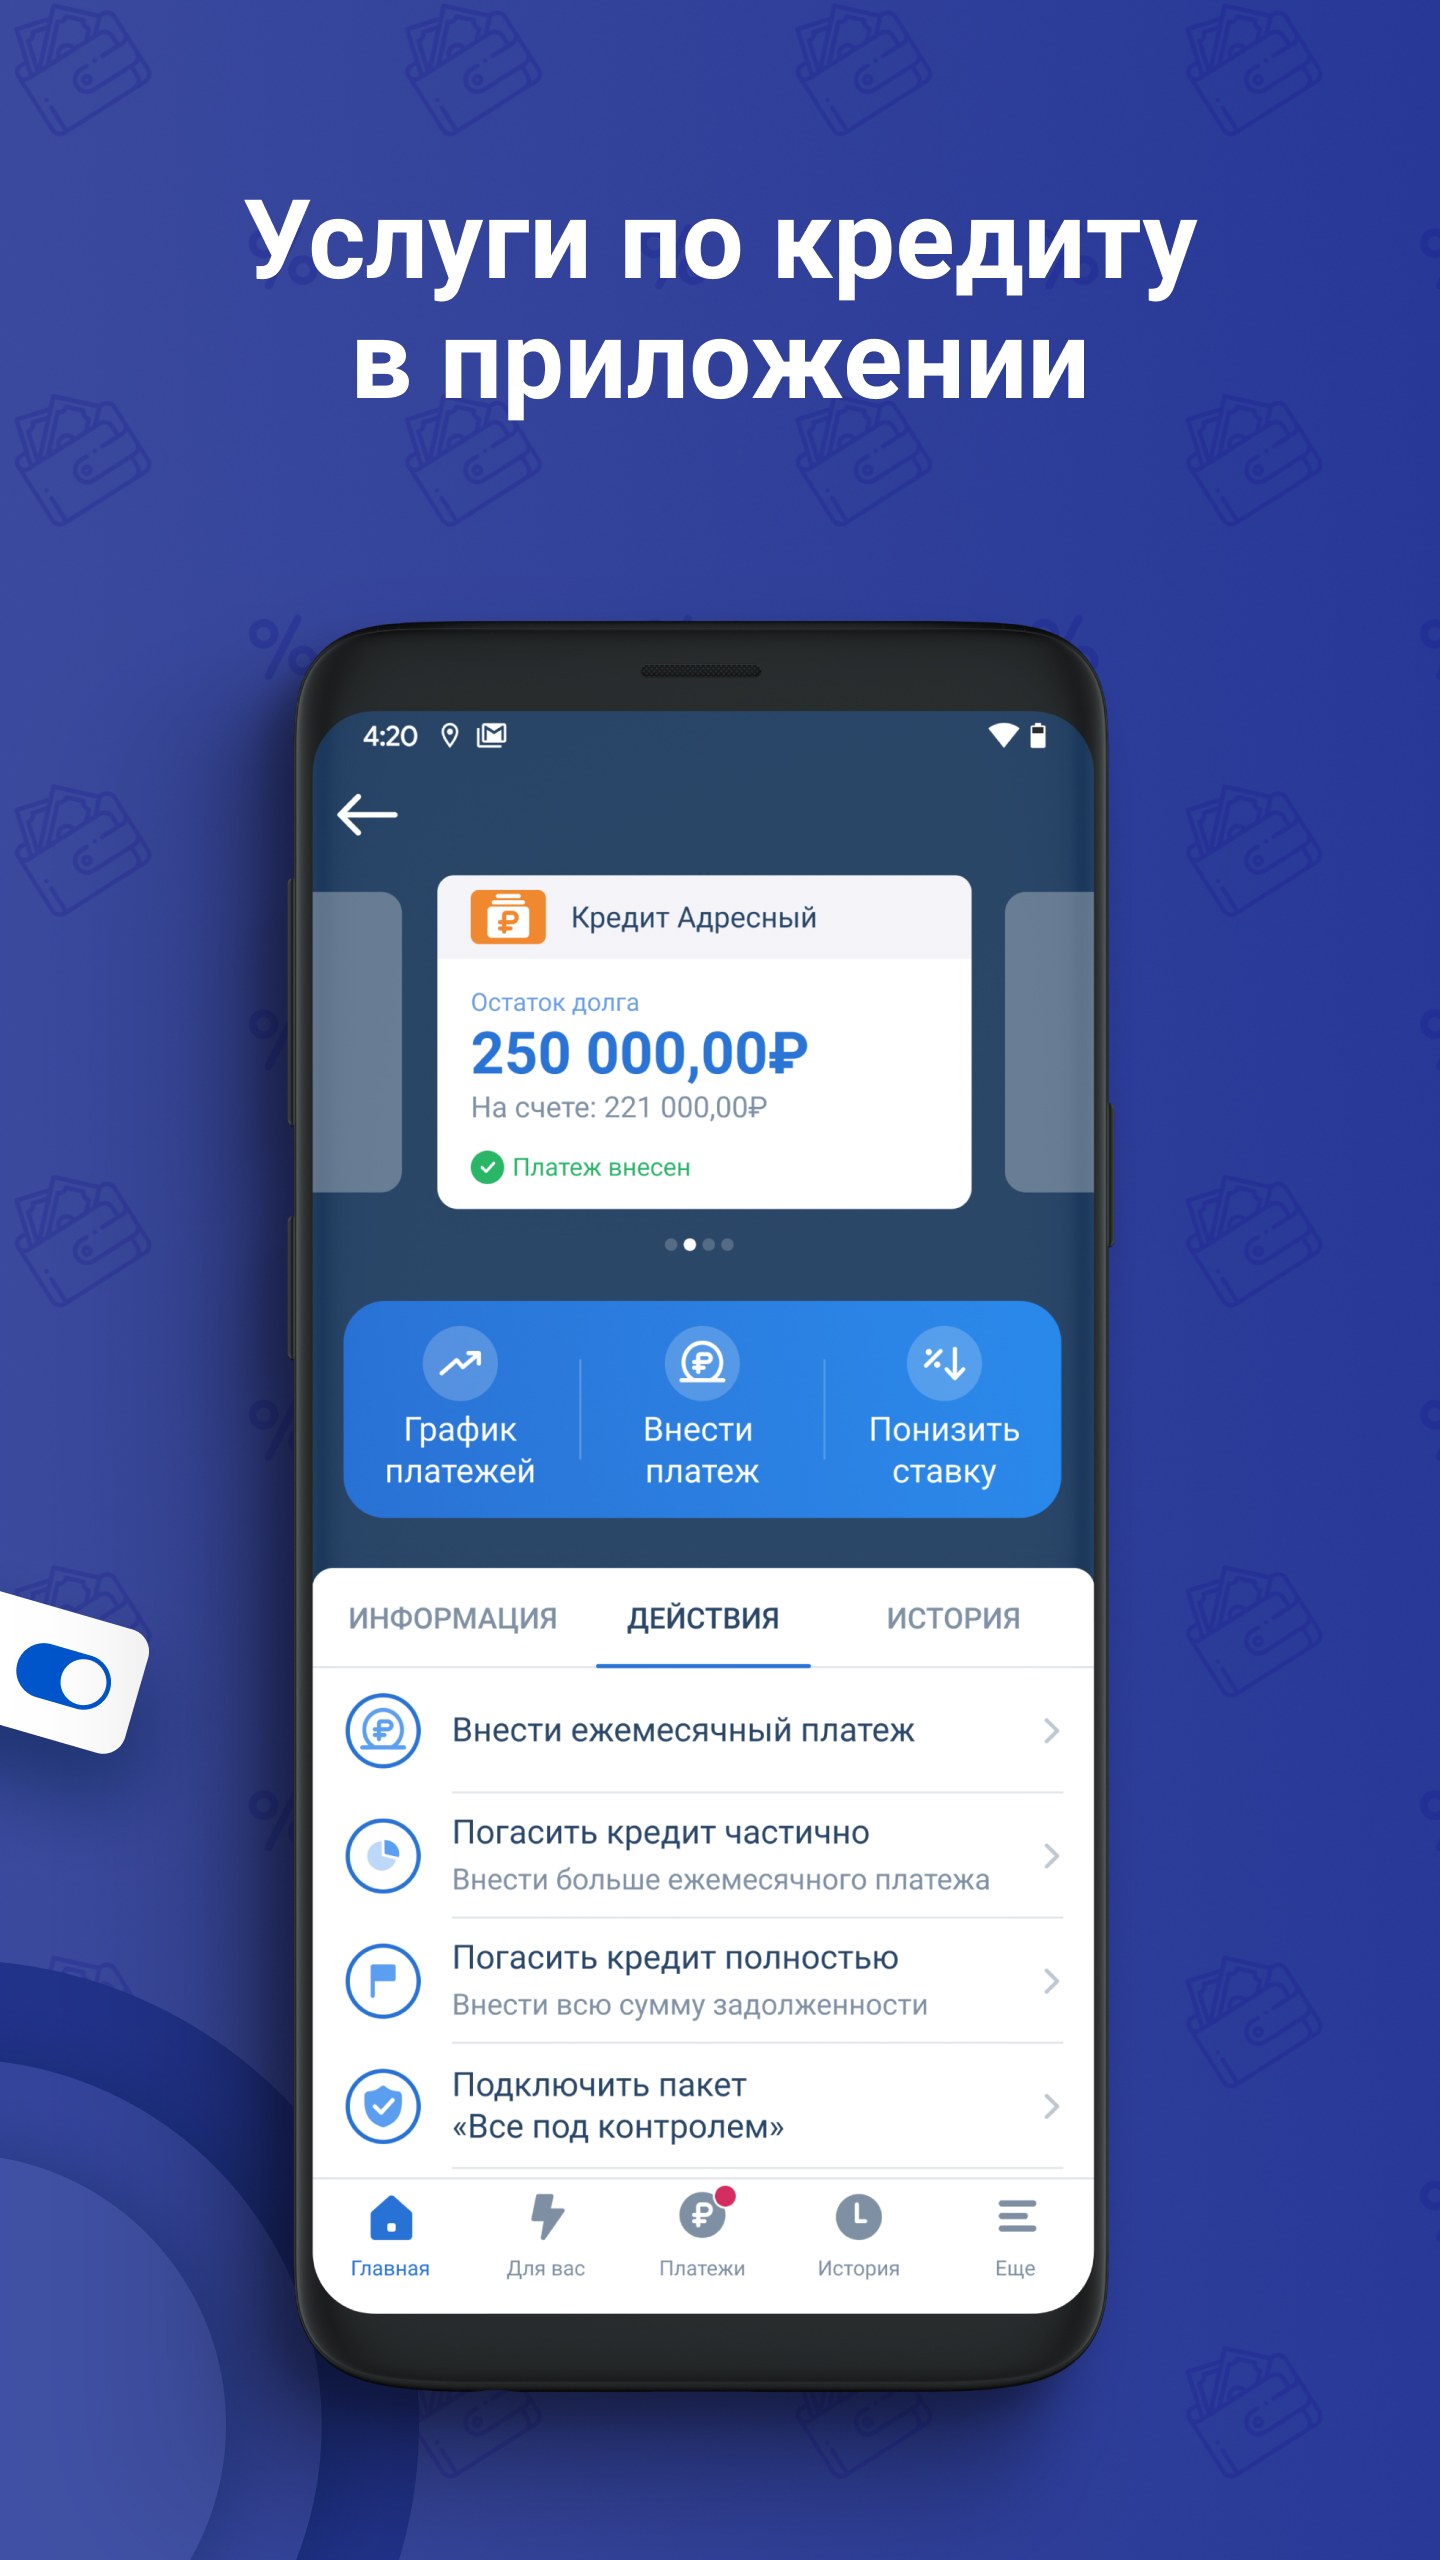 Android application Почта Банк screenshort